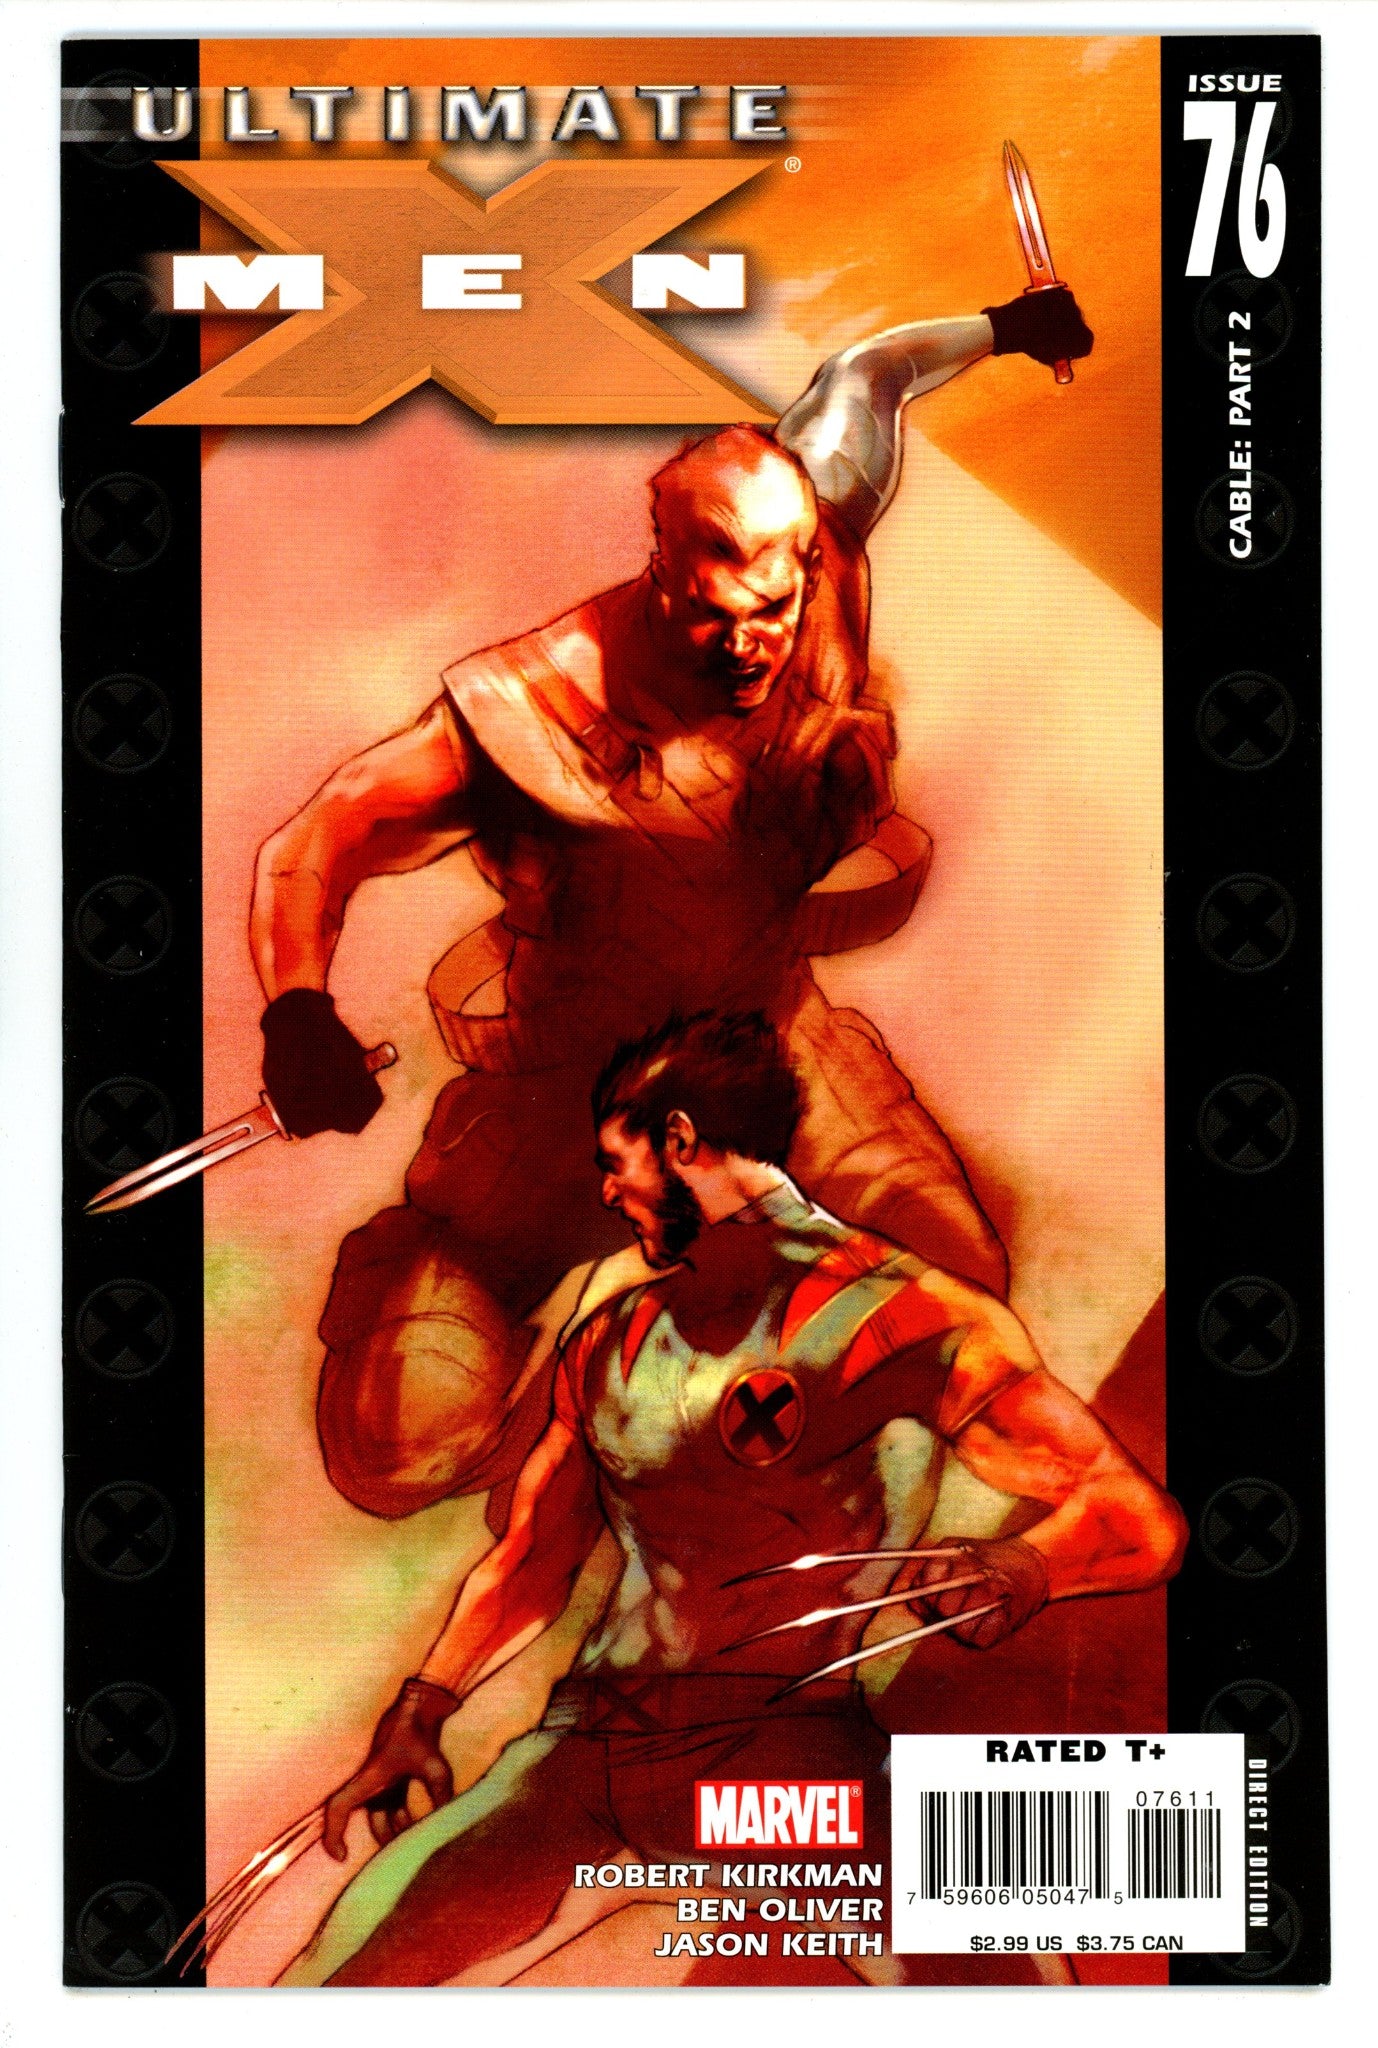 Ultimate X-Men Vol 1 76 High Grade (2007) 